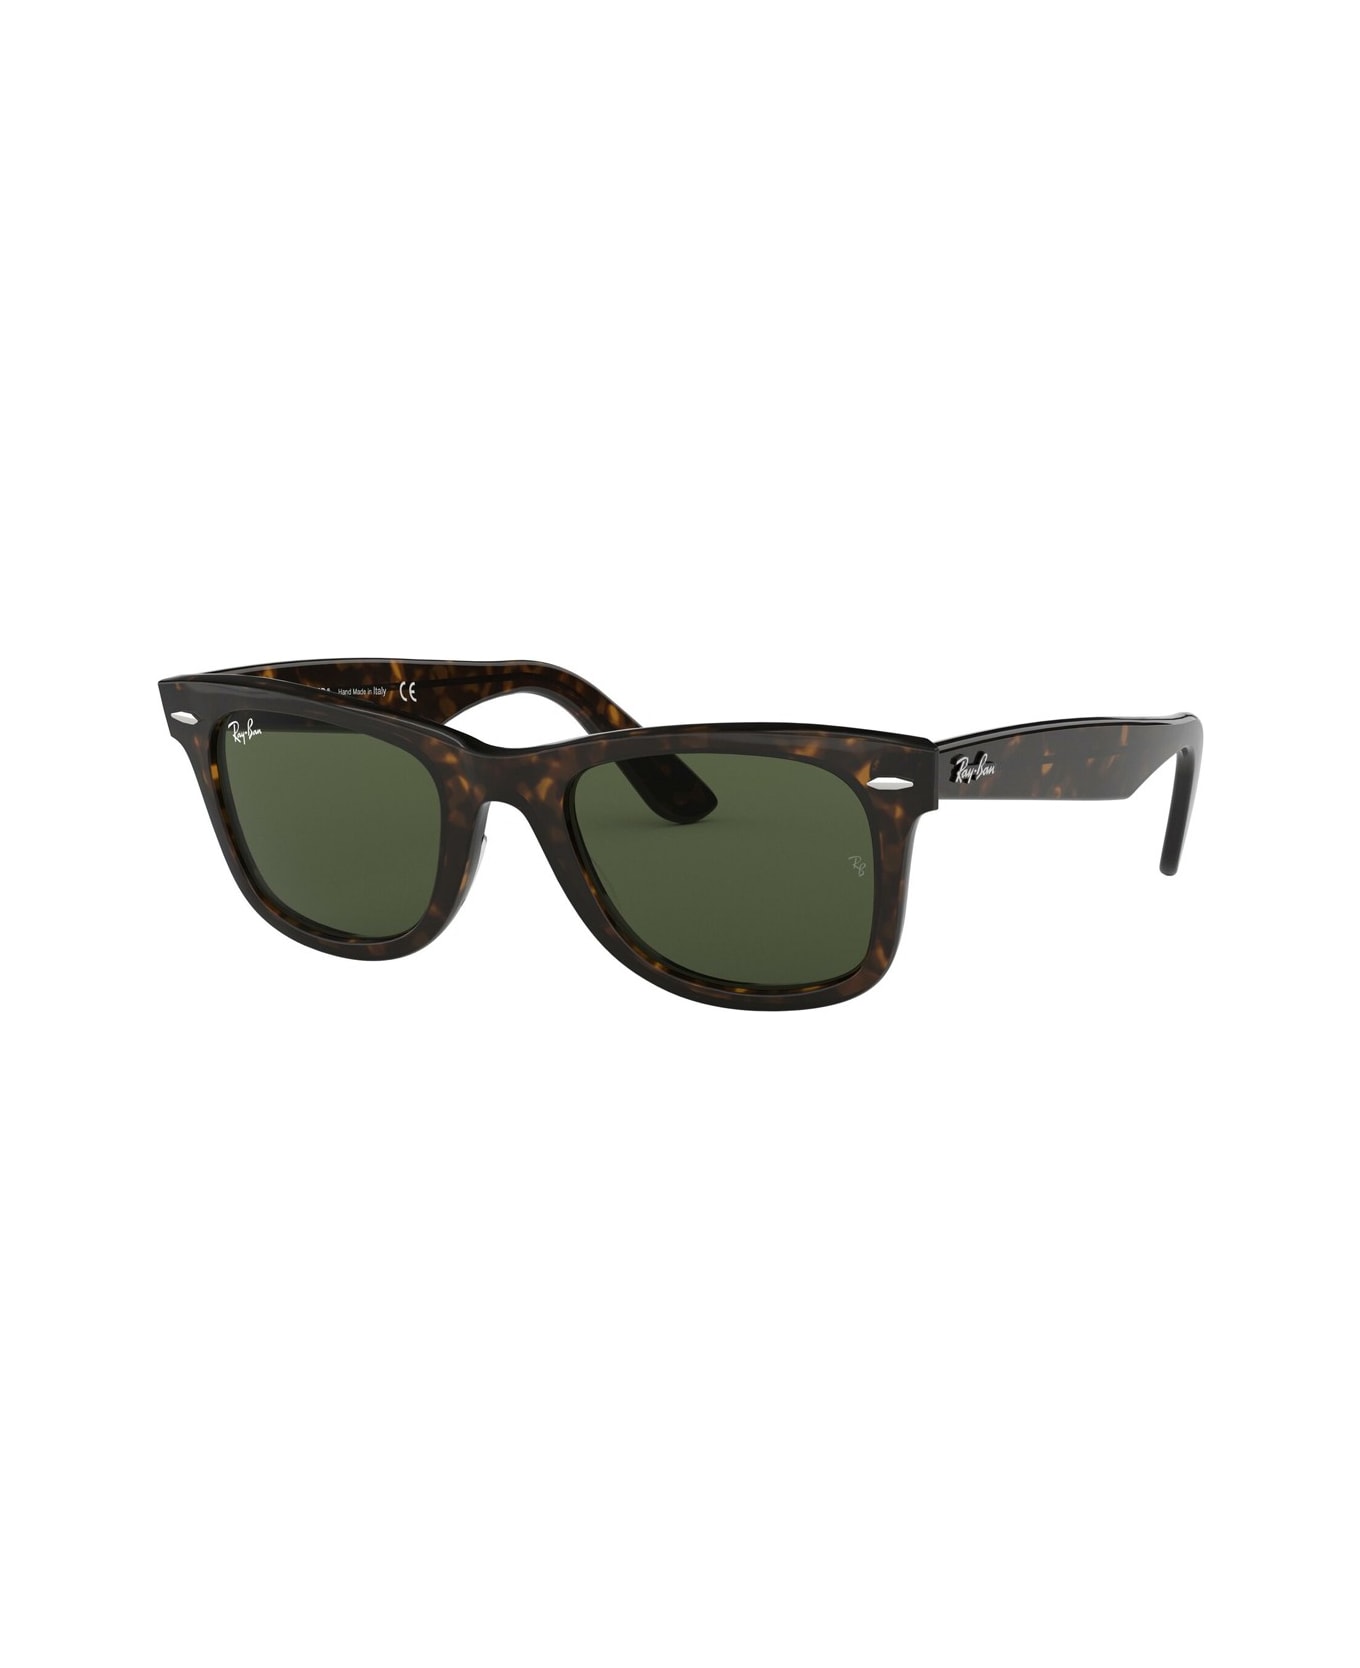 Ray-Ban Original Wayfarer Rb 2140 Sunglasses - Marrone